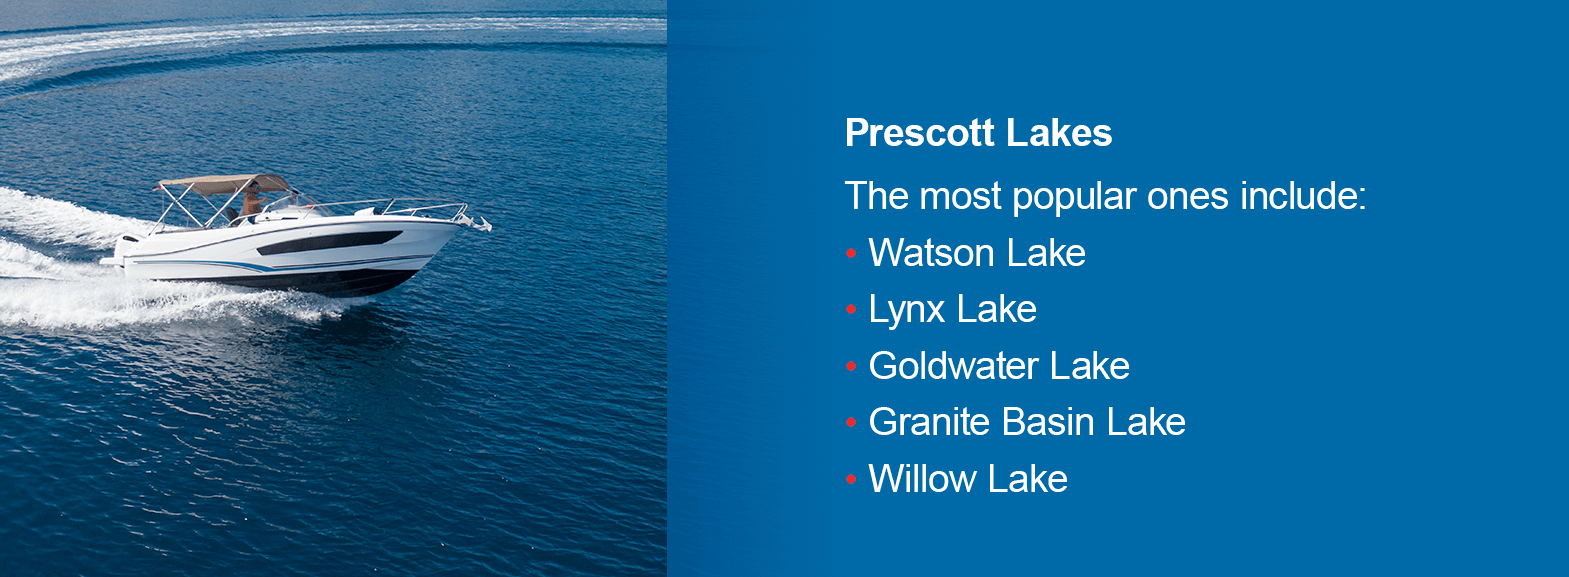 The most popular Prescott Lakes